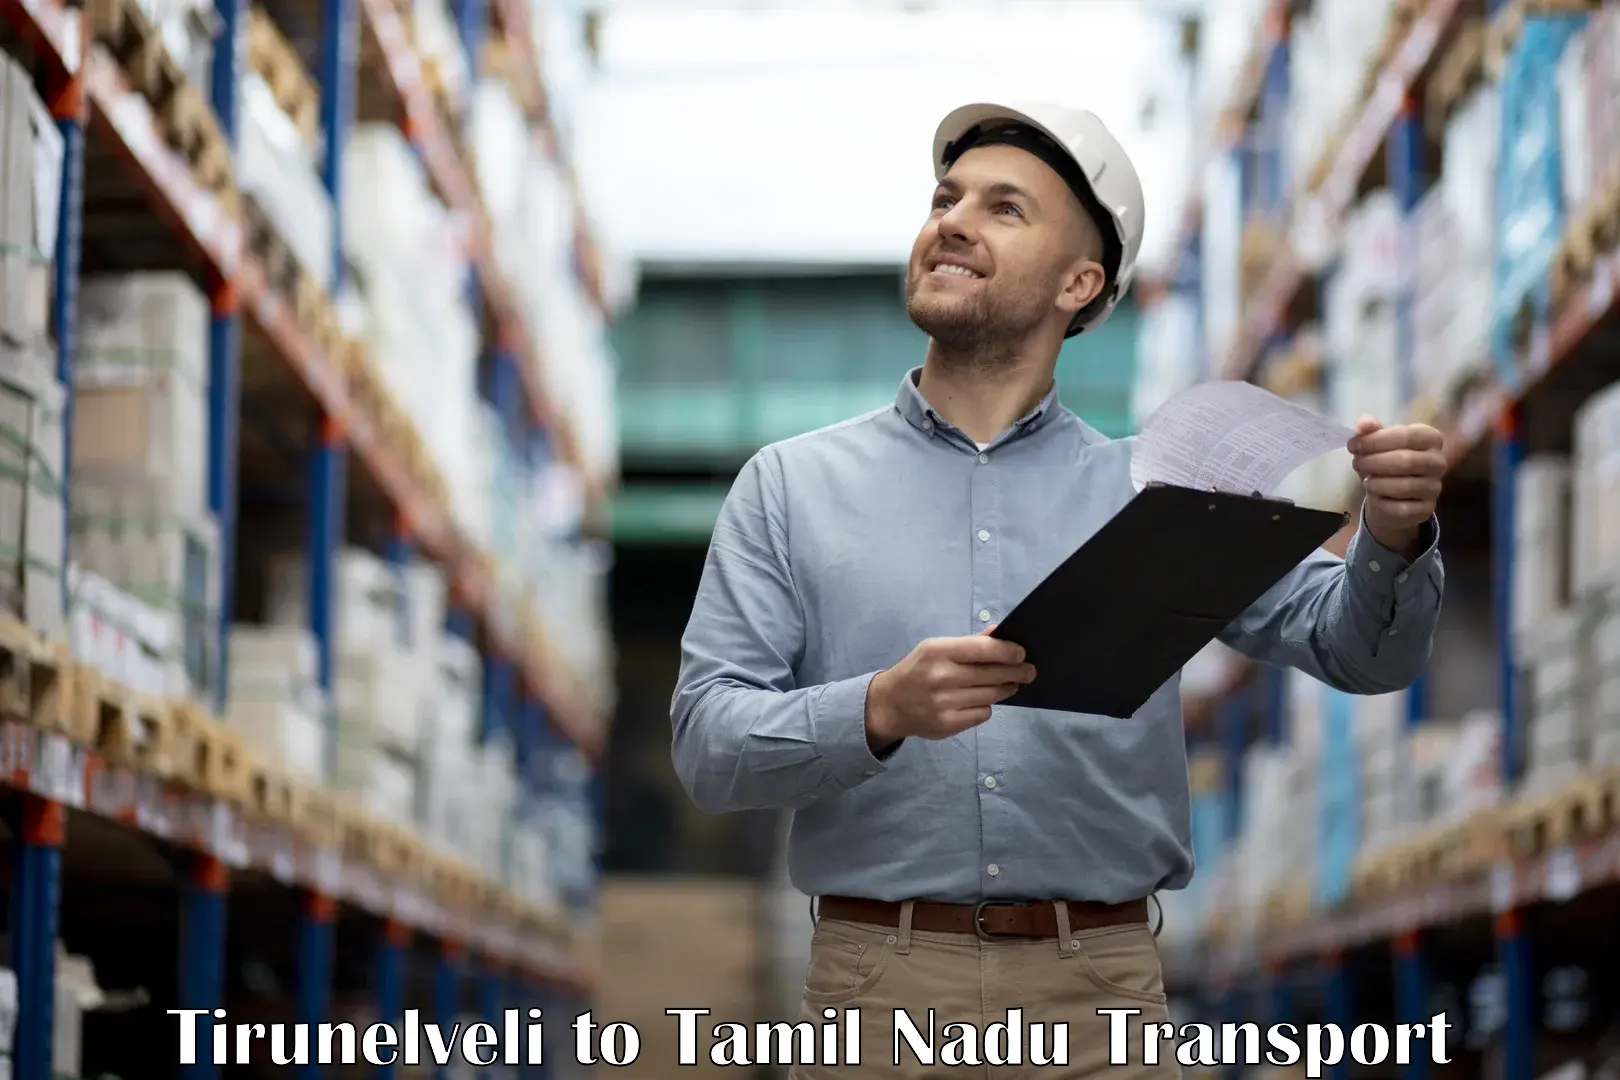 Online transport service Tirunelveli to Omalur